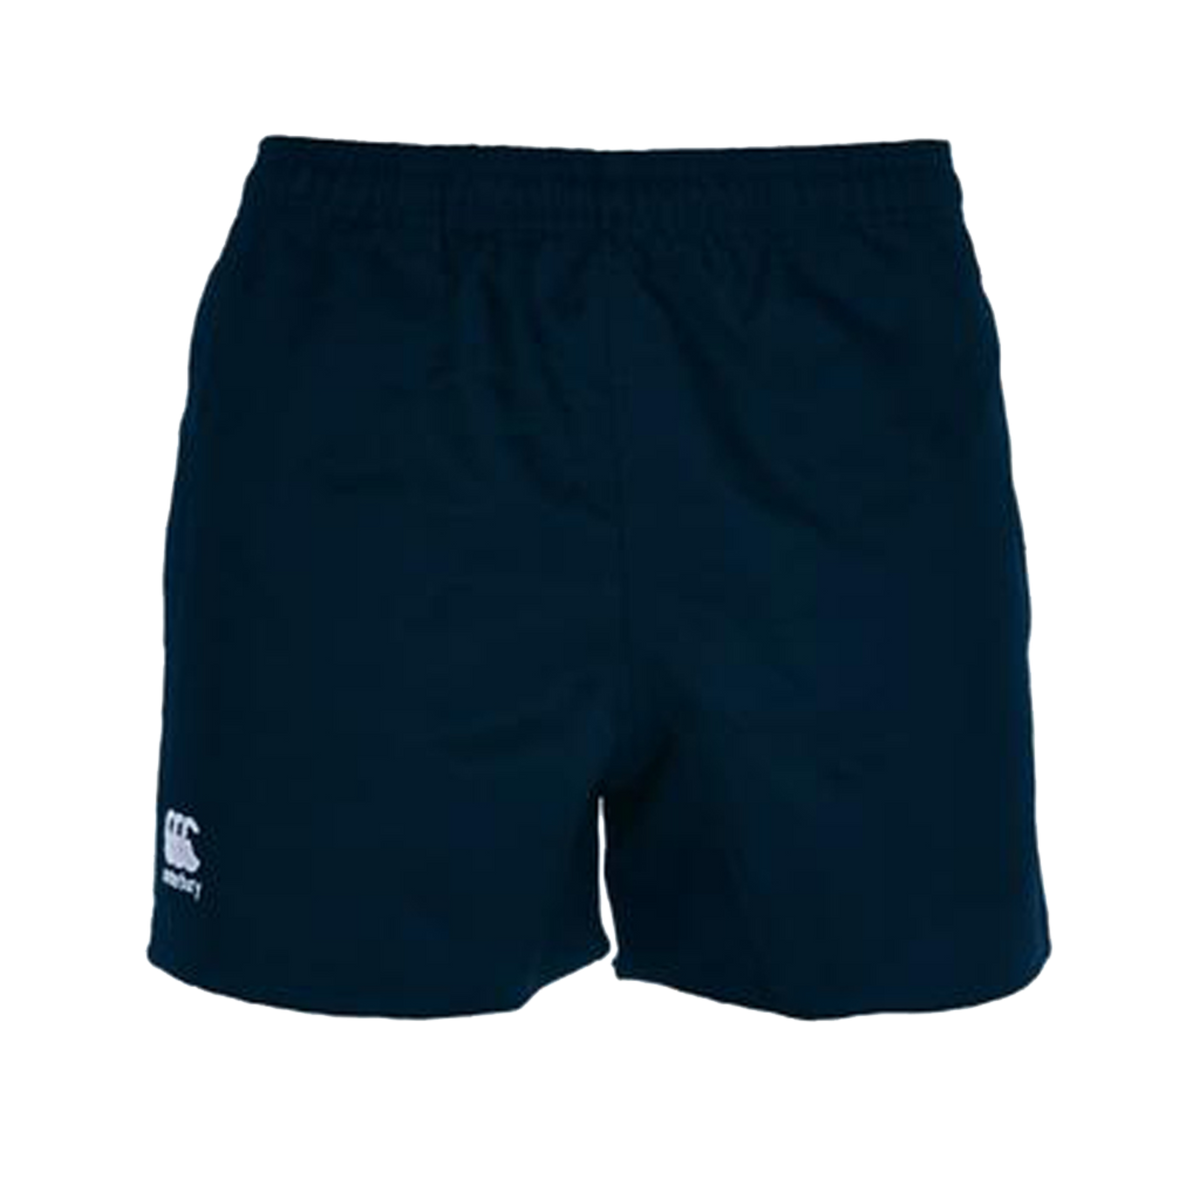 Canterbury CCC Professional Polyester Shorts - Adult Unisex Sizing XS-5XL - Navy